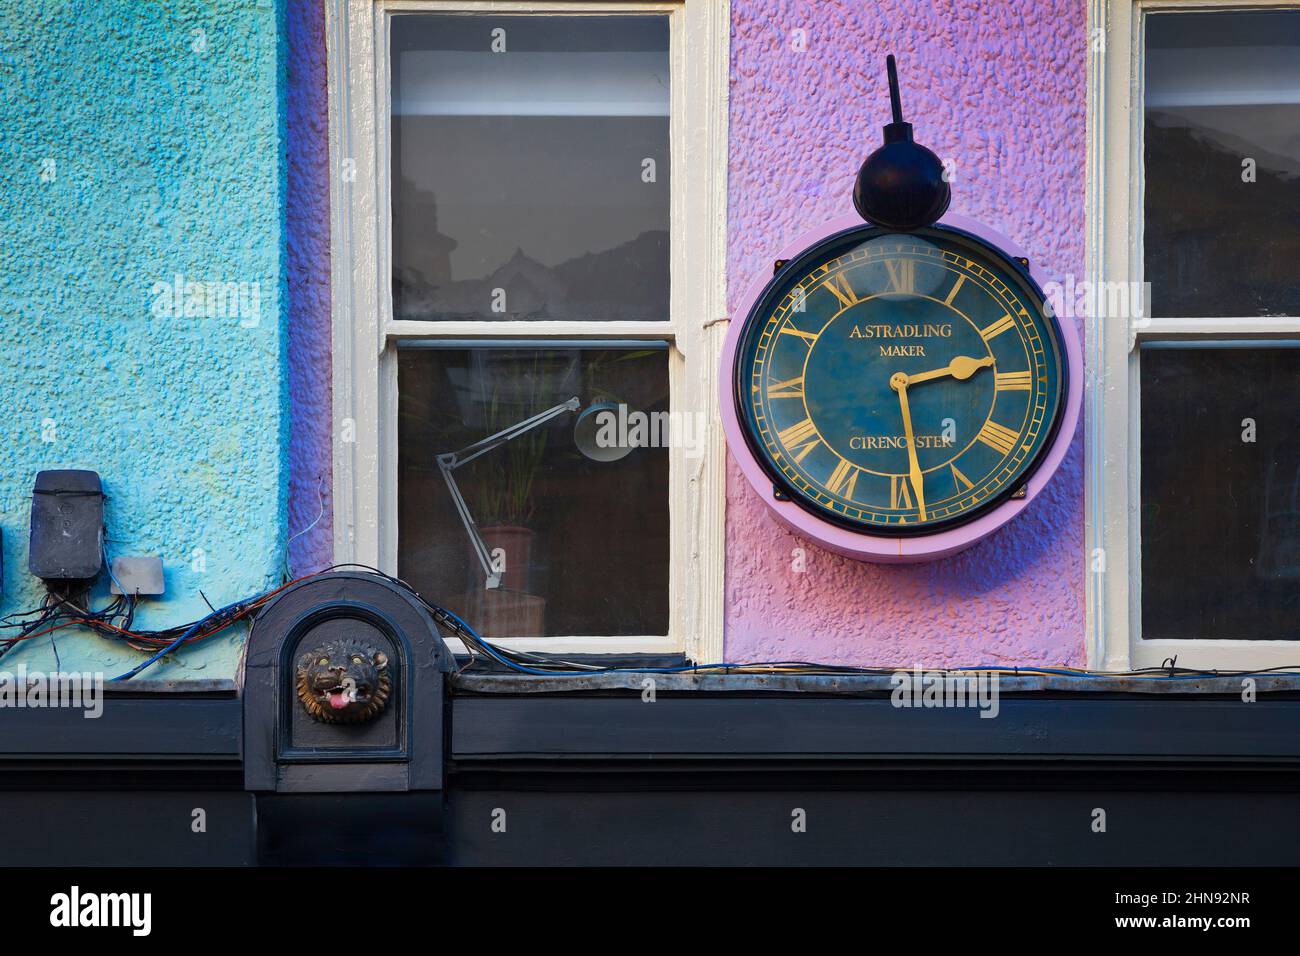 Tienda reloj de cara, Cirencester, Cotswolds, A.Stradling reloj maker Foto de stock